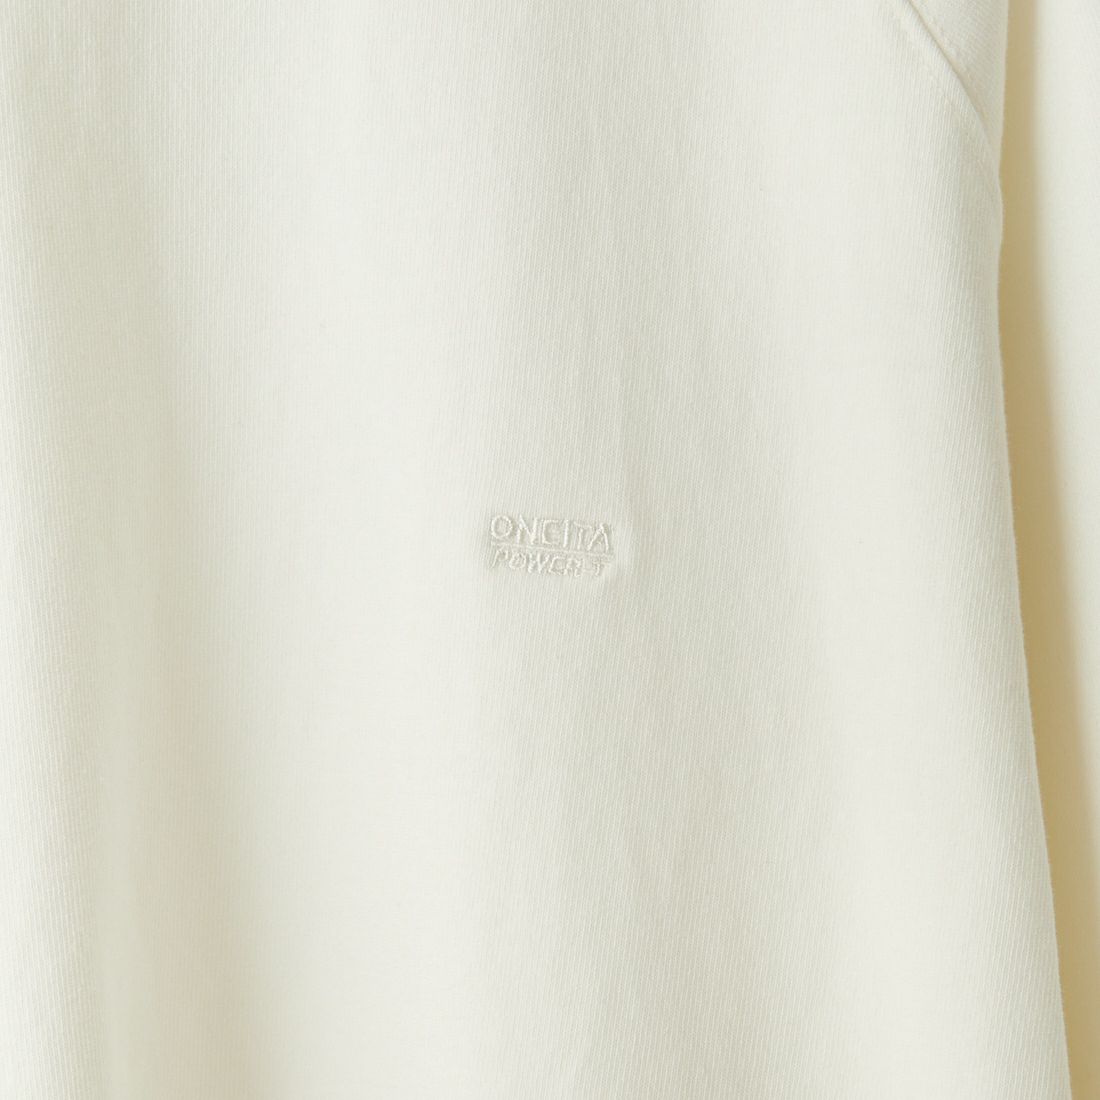 ONEITA [オニータ] POWER-T ワンポイント刺繍ロゴ ピグメントショートスリーブTシャツ [2422-421IN] ONEITA [オニータ] POWER-T ワンポイント刺繍ロゴ ピグメントショートスリーブTシャツ [2422-421IN] WHITE